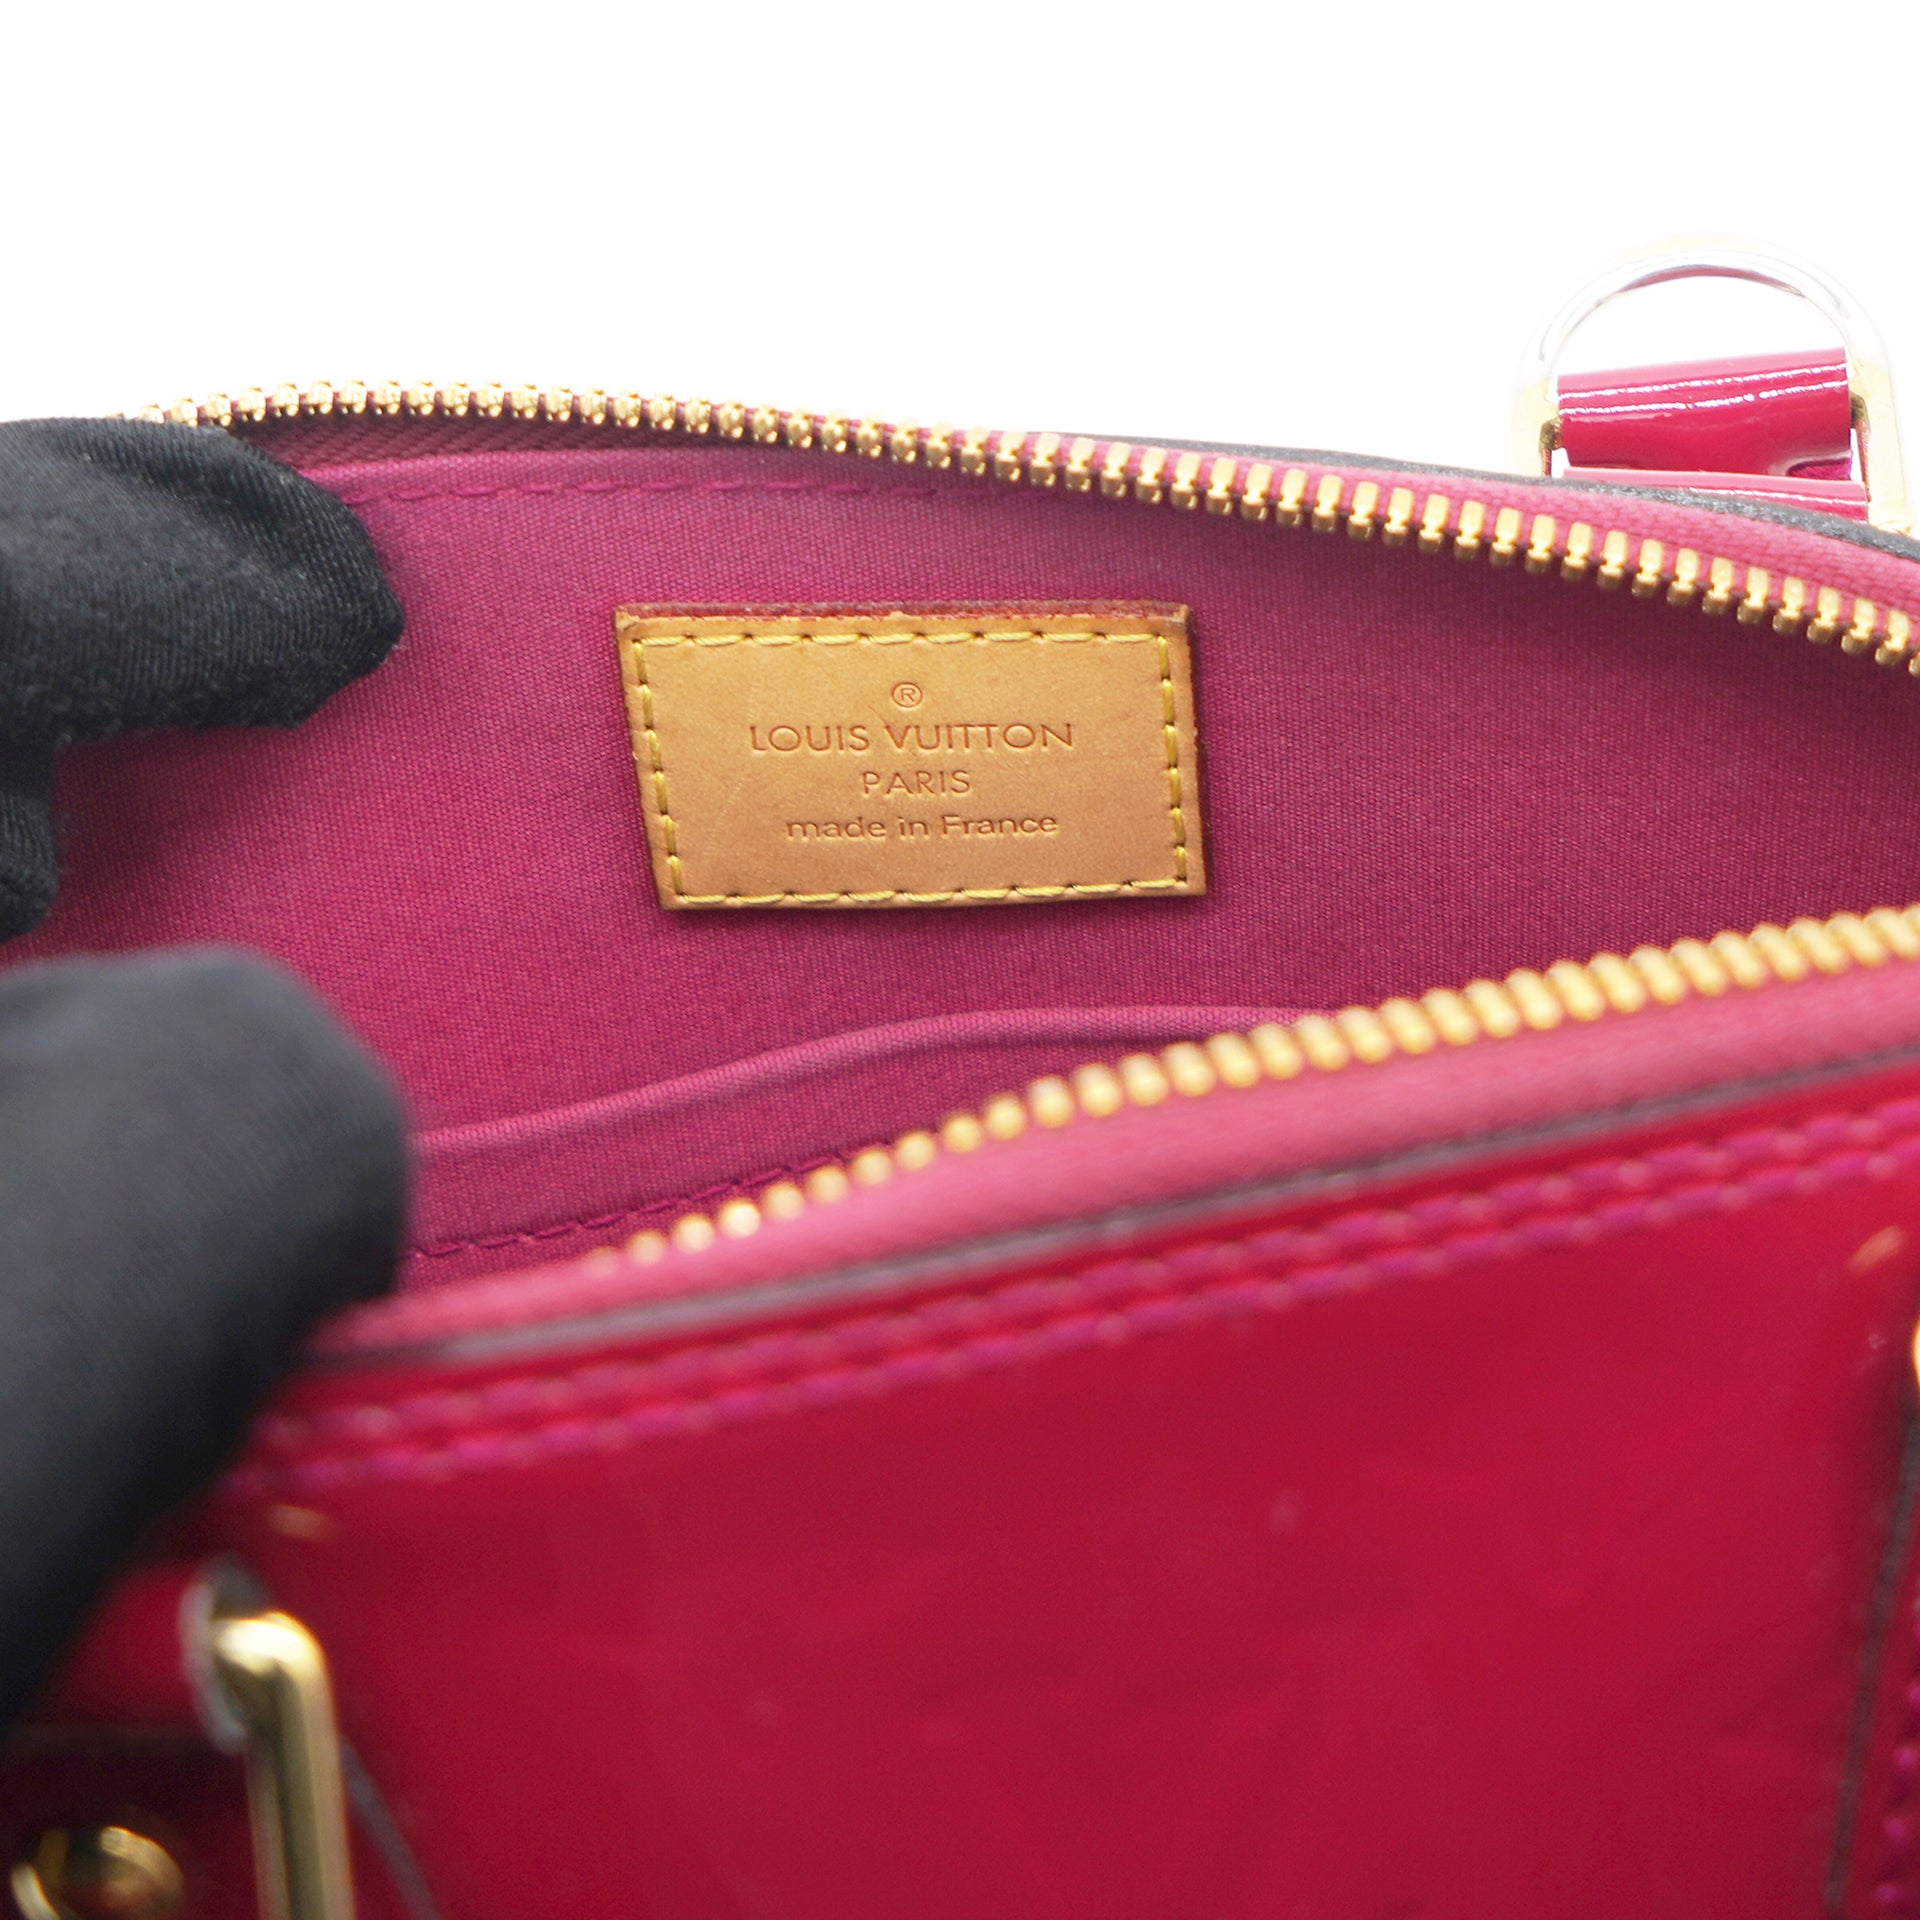 Alma BB Bag - Luxury Monogram Vernis Leather Purple